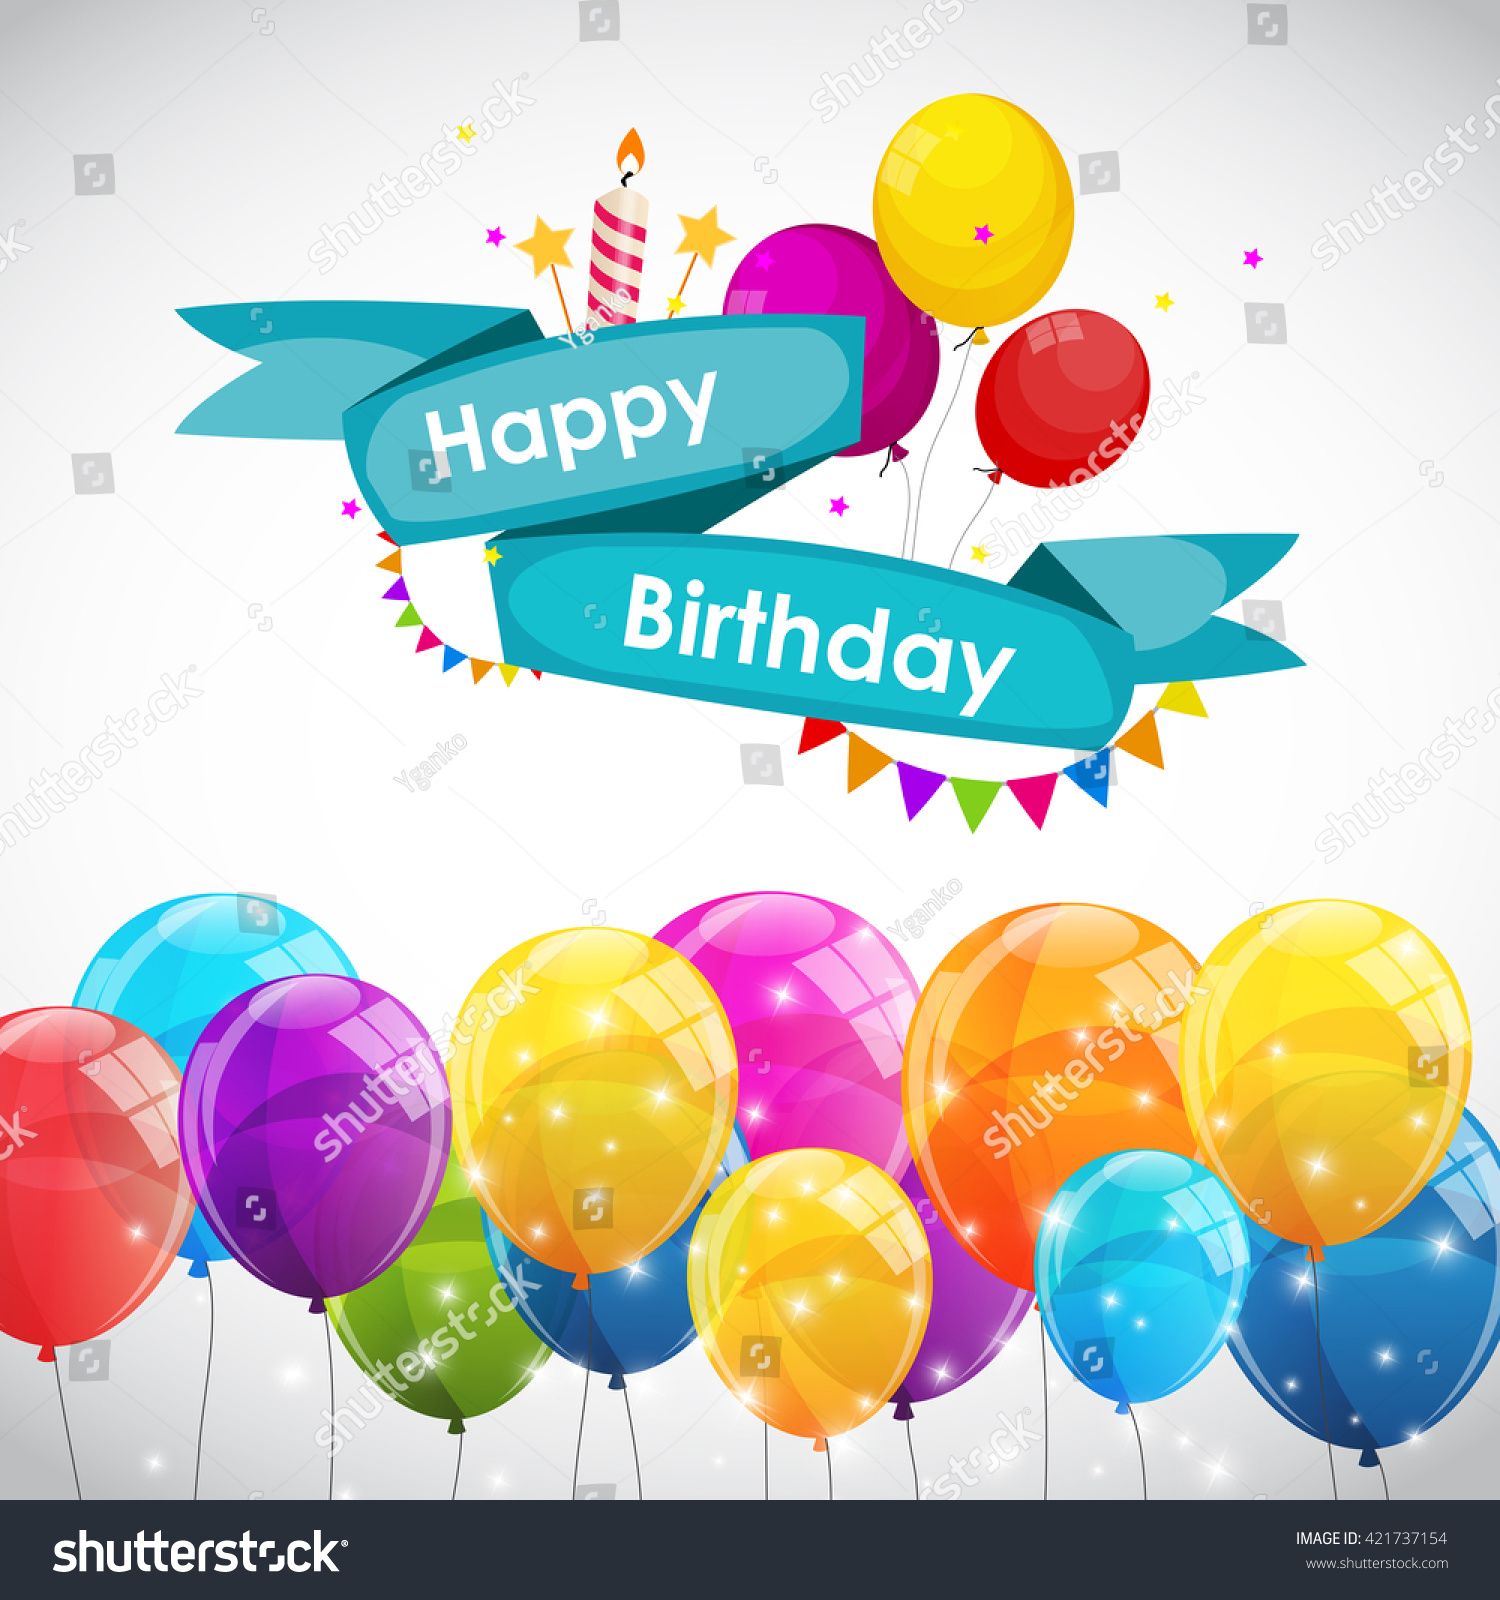 Download Happy Birthday Card Template Balloons Vector Stock Vector ...